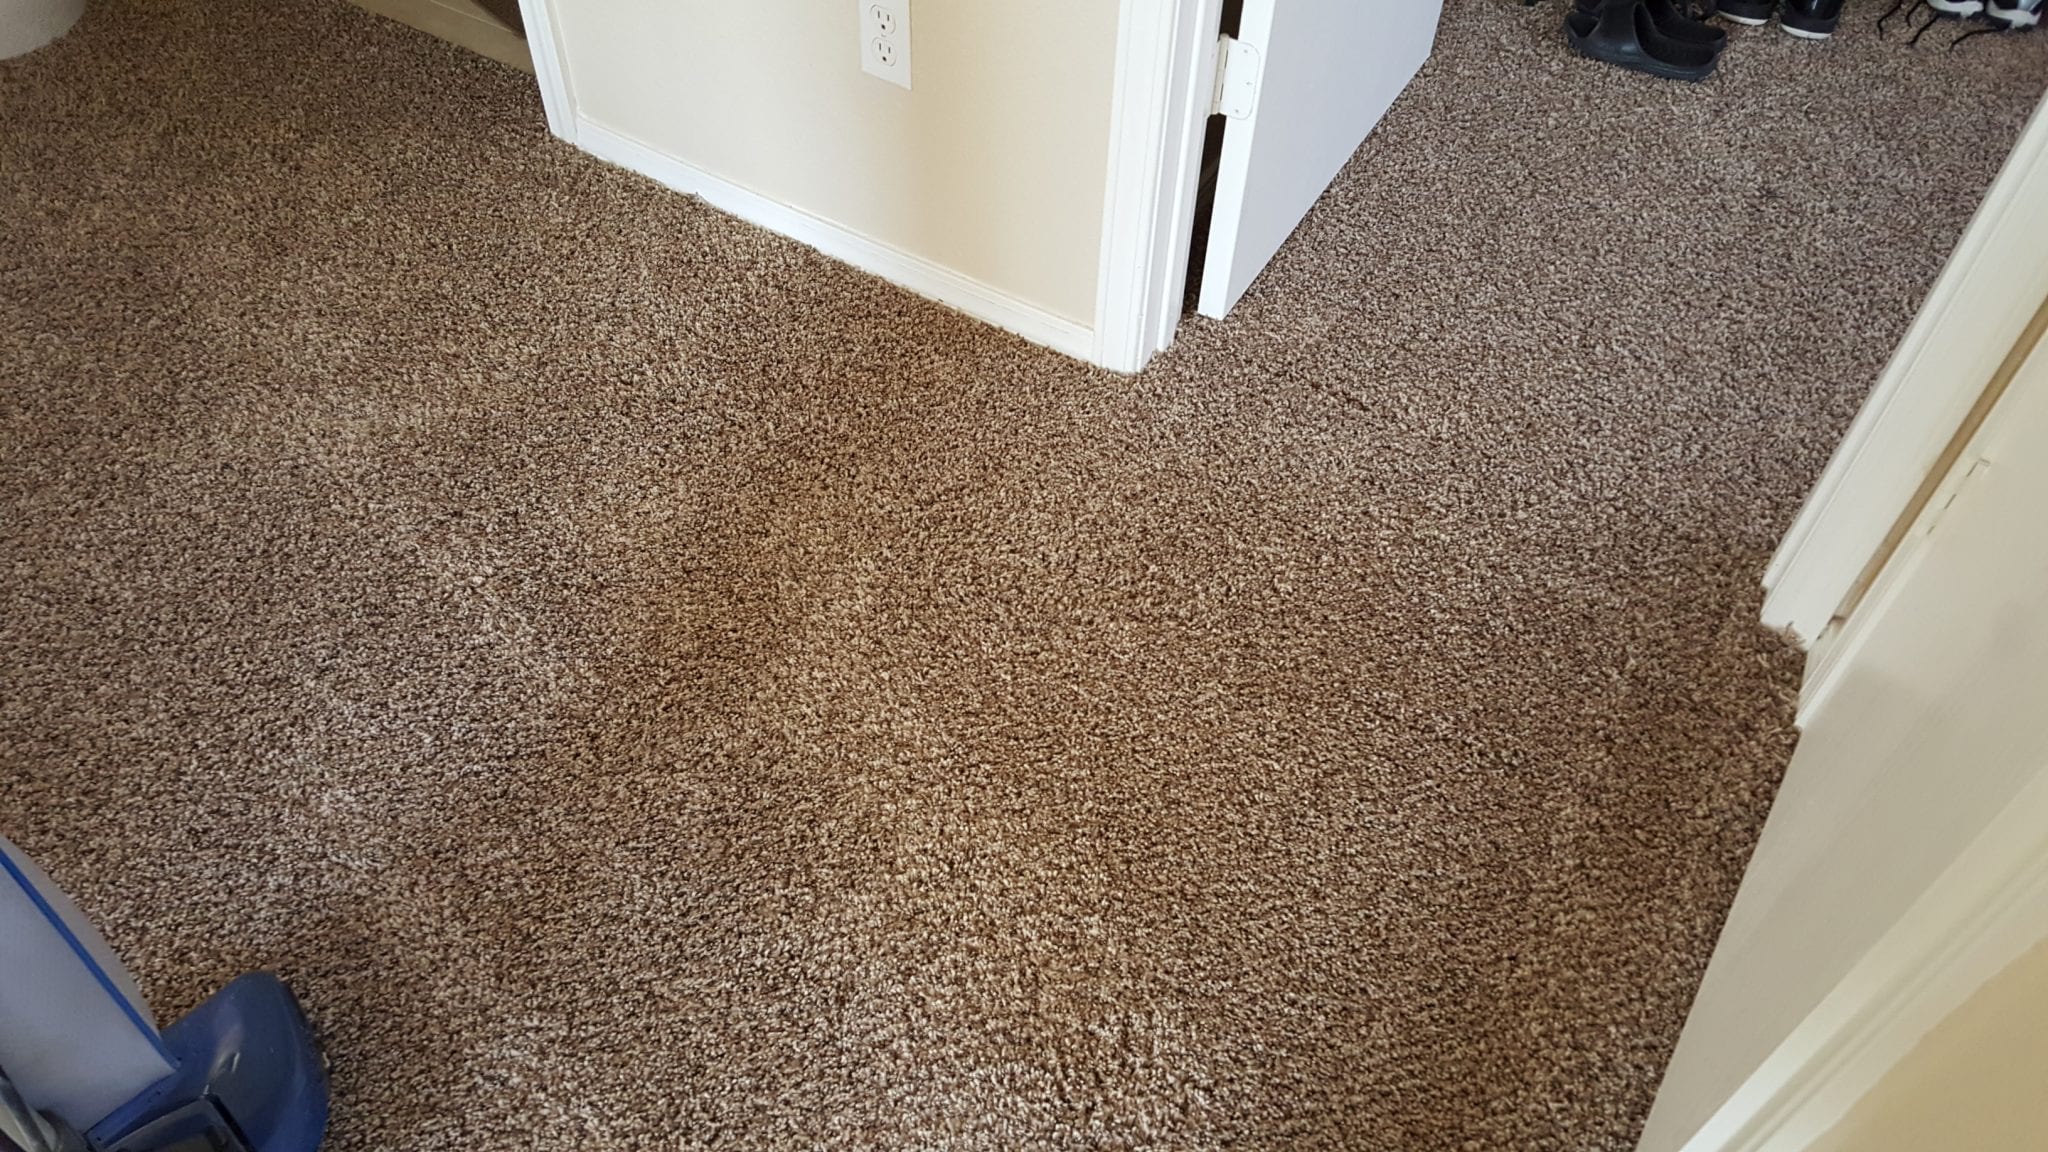 Pet damage carpet repair on a step. : r/carpetcleaningporn